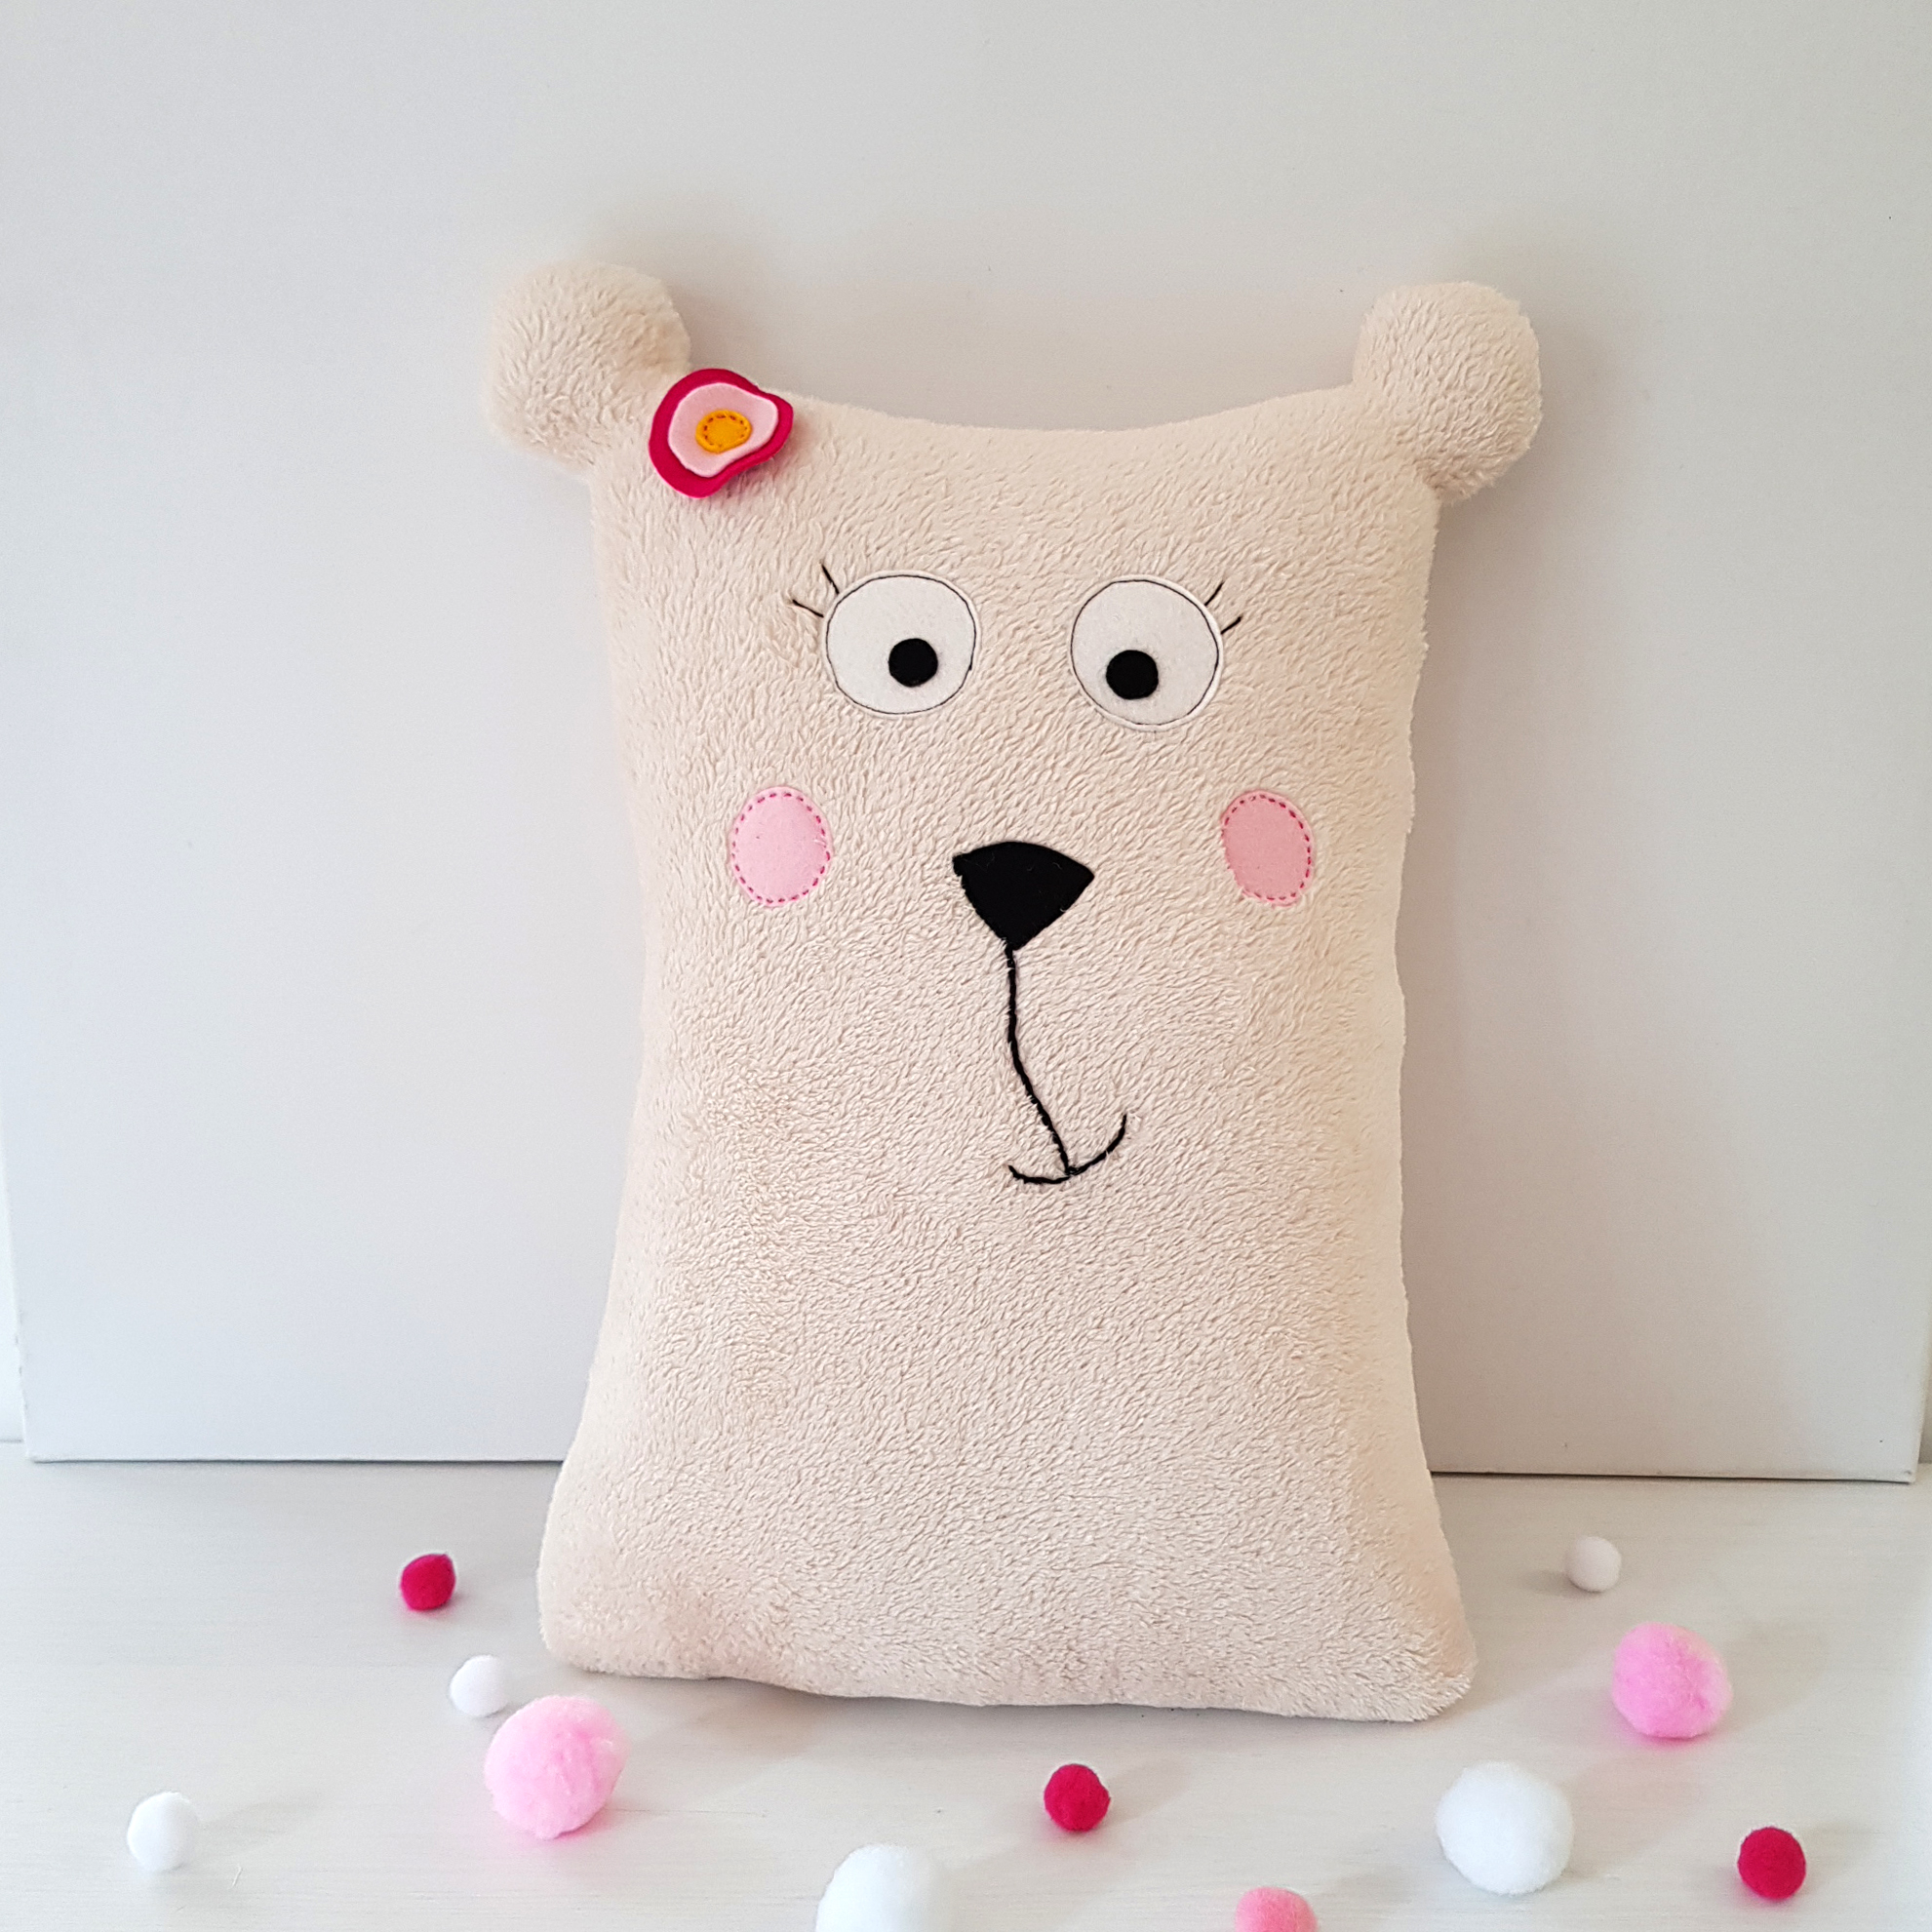 TEDDY BEAR PATTERN, girl soft toy pillow